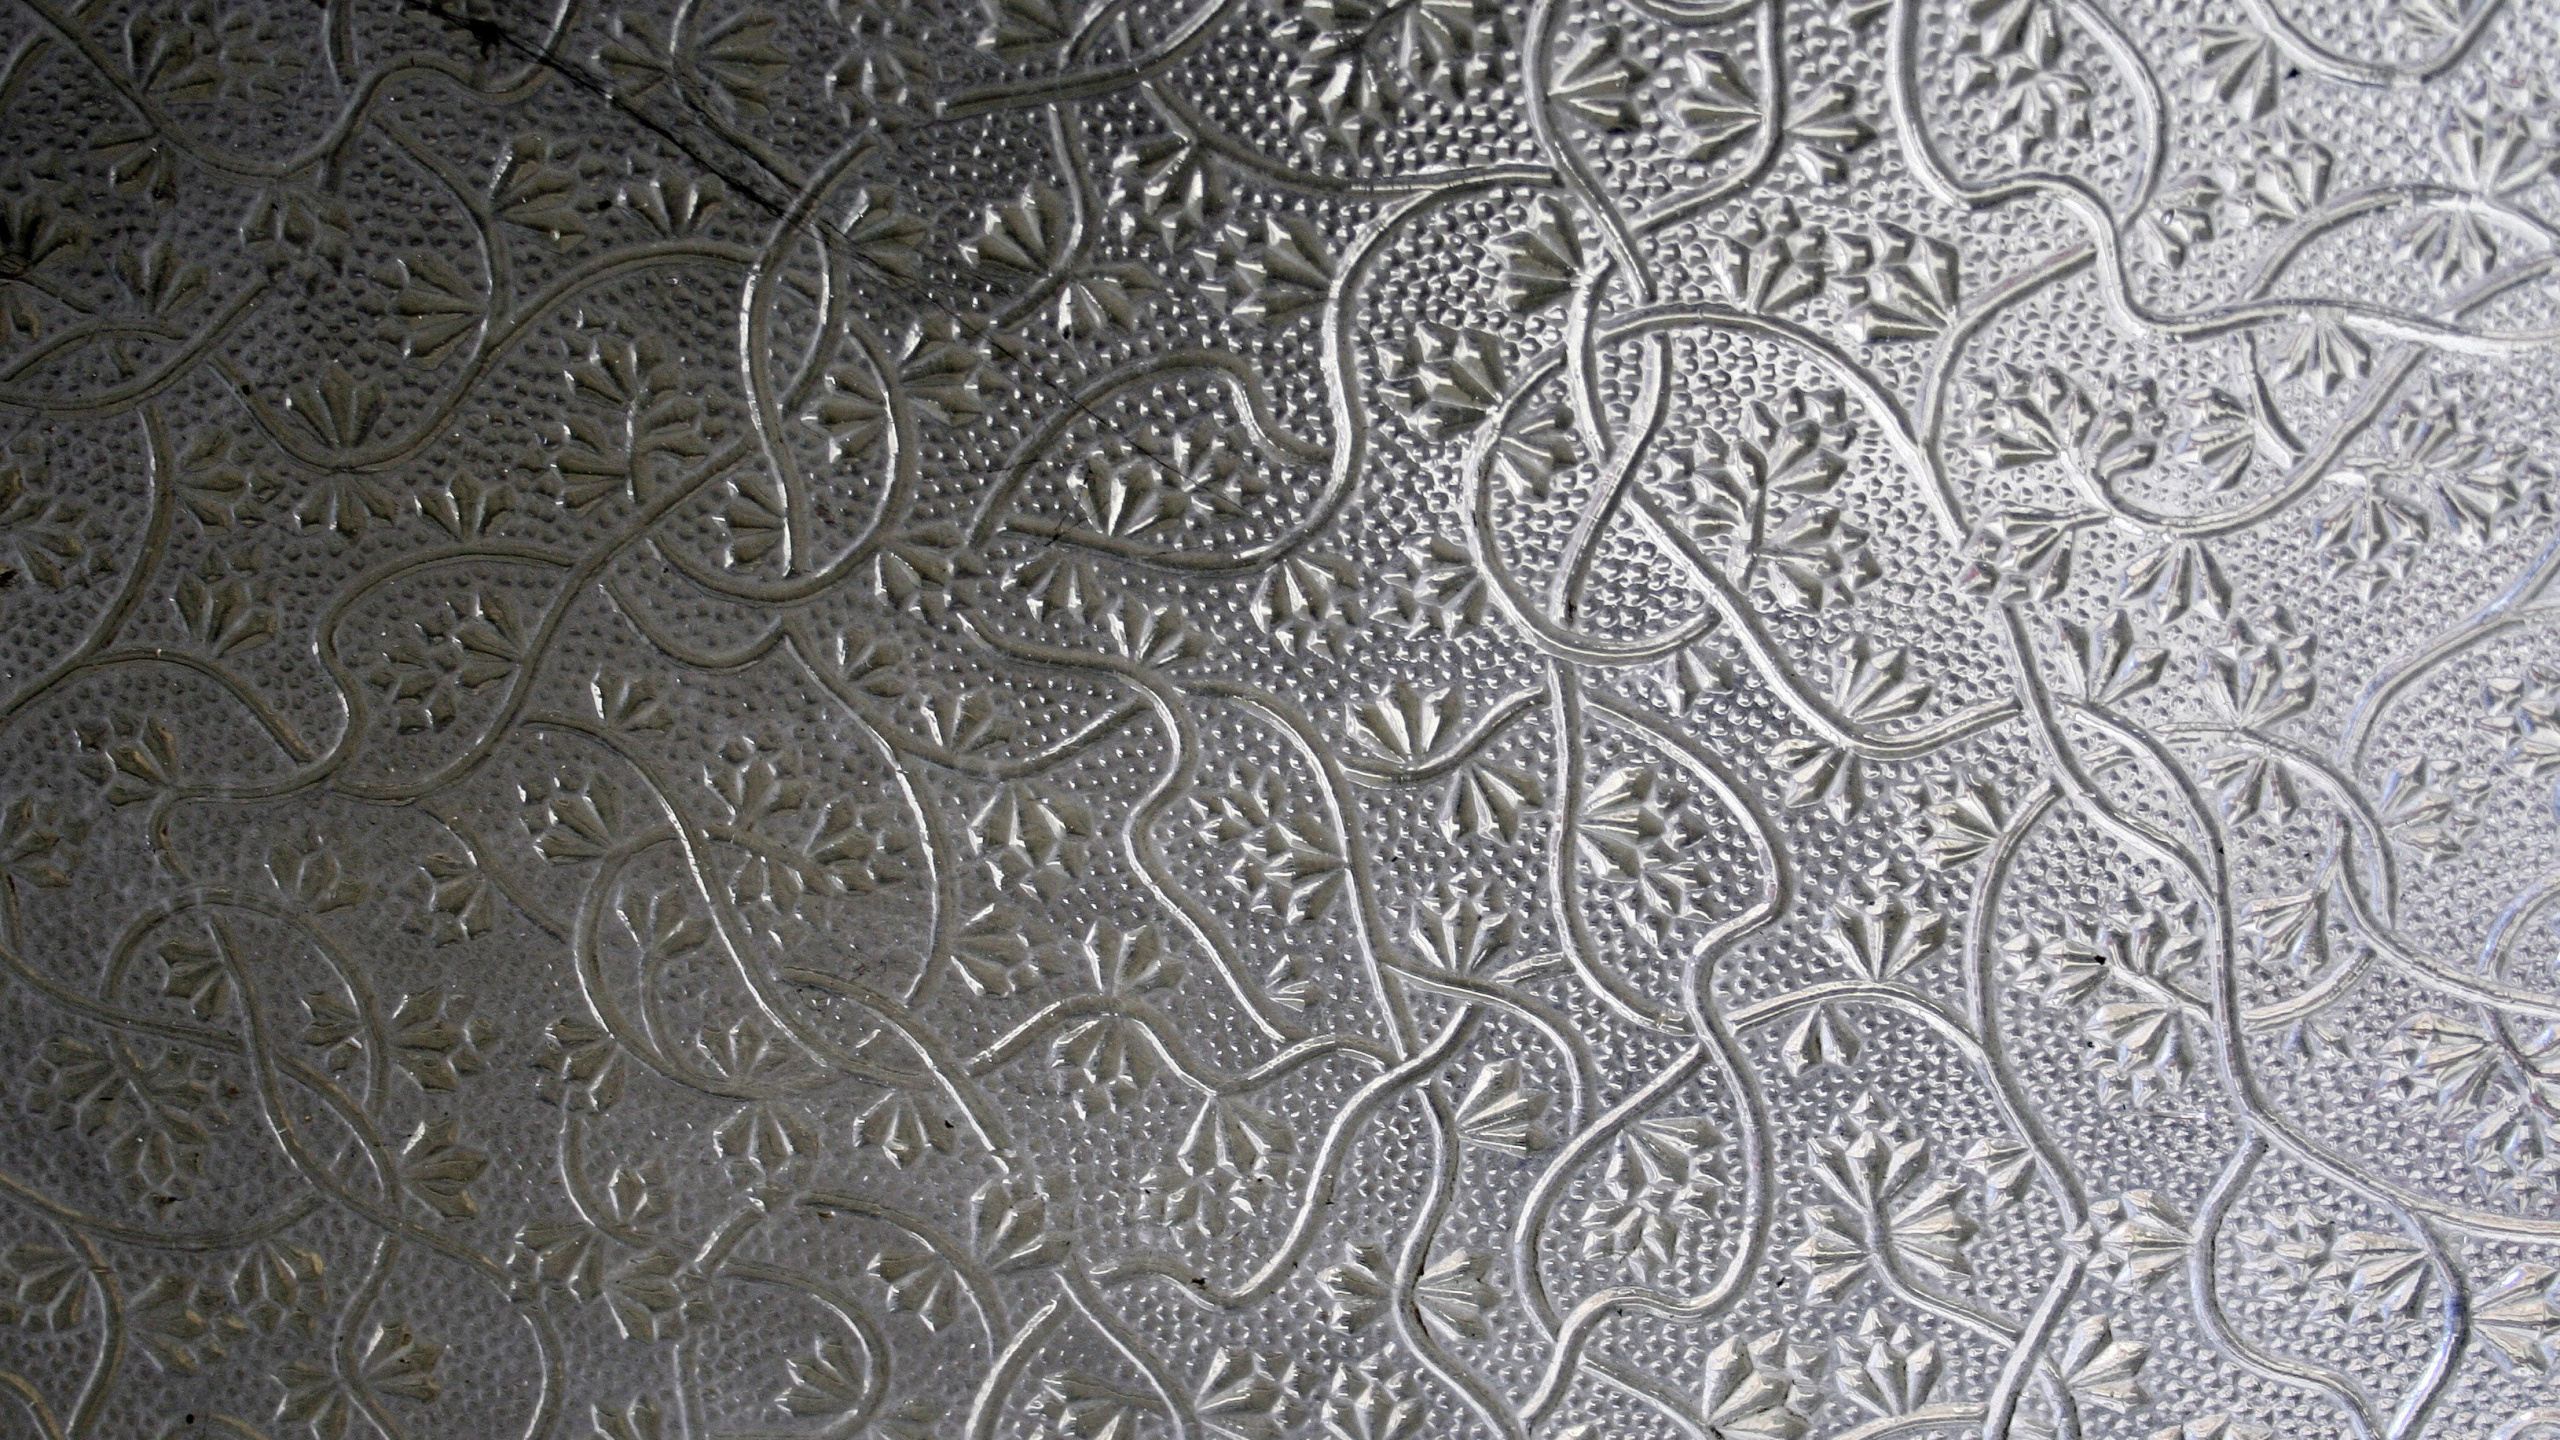 Textil Floral Blanco y Gris. Wallpaper in 2560x1440 Resolution